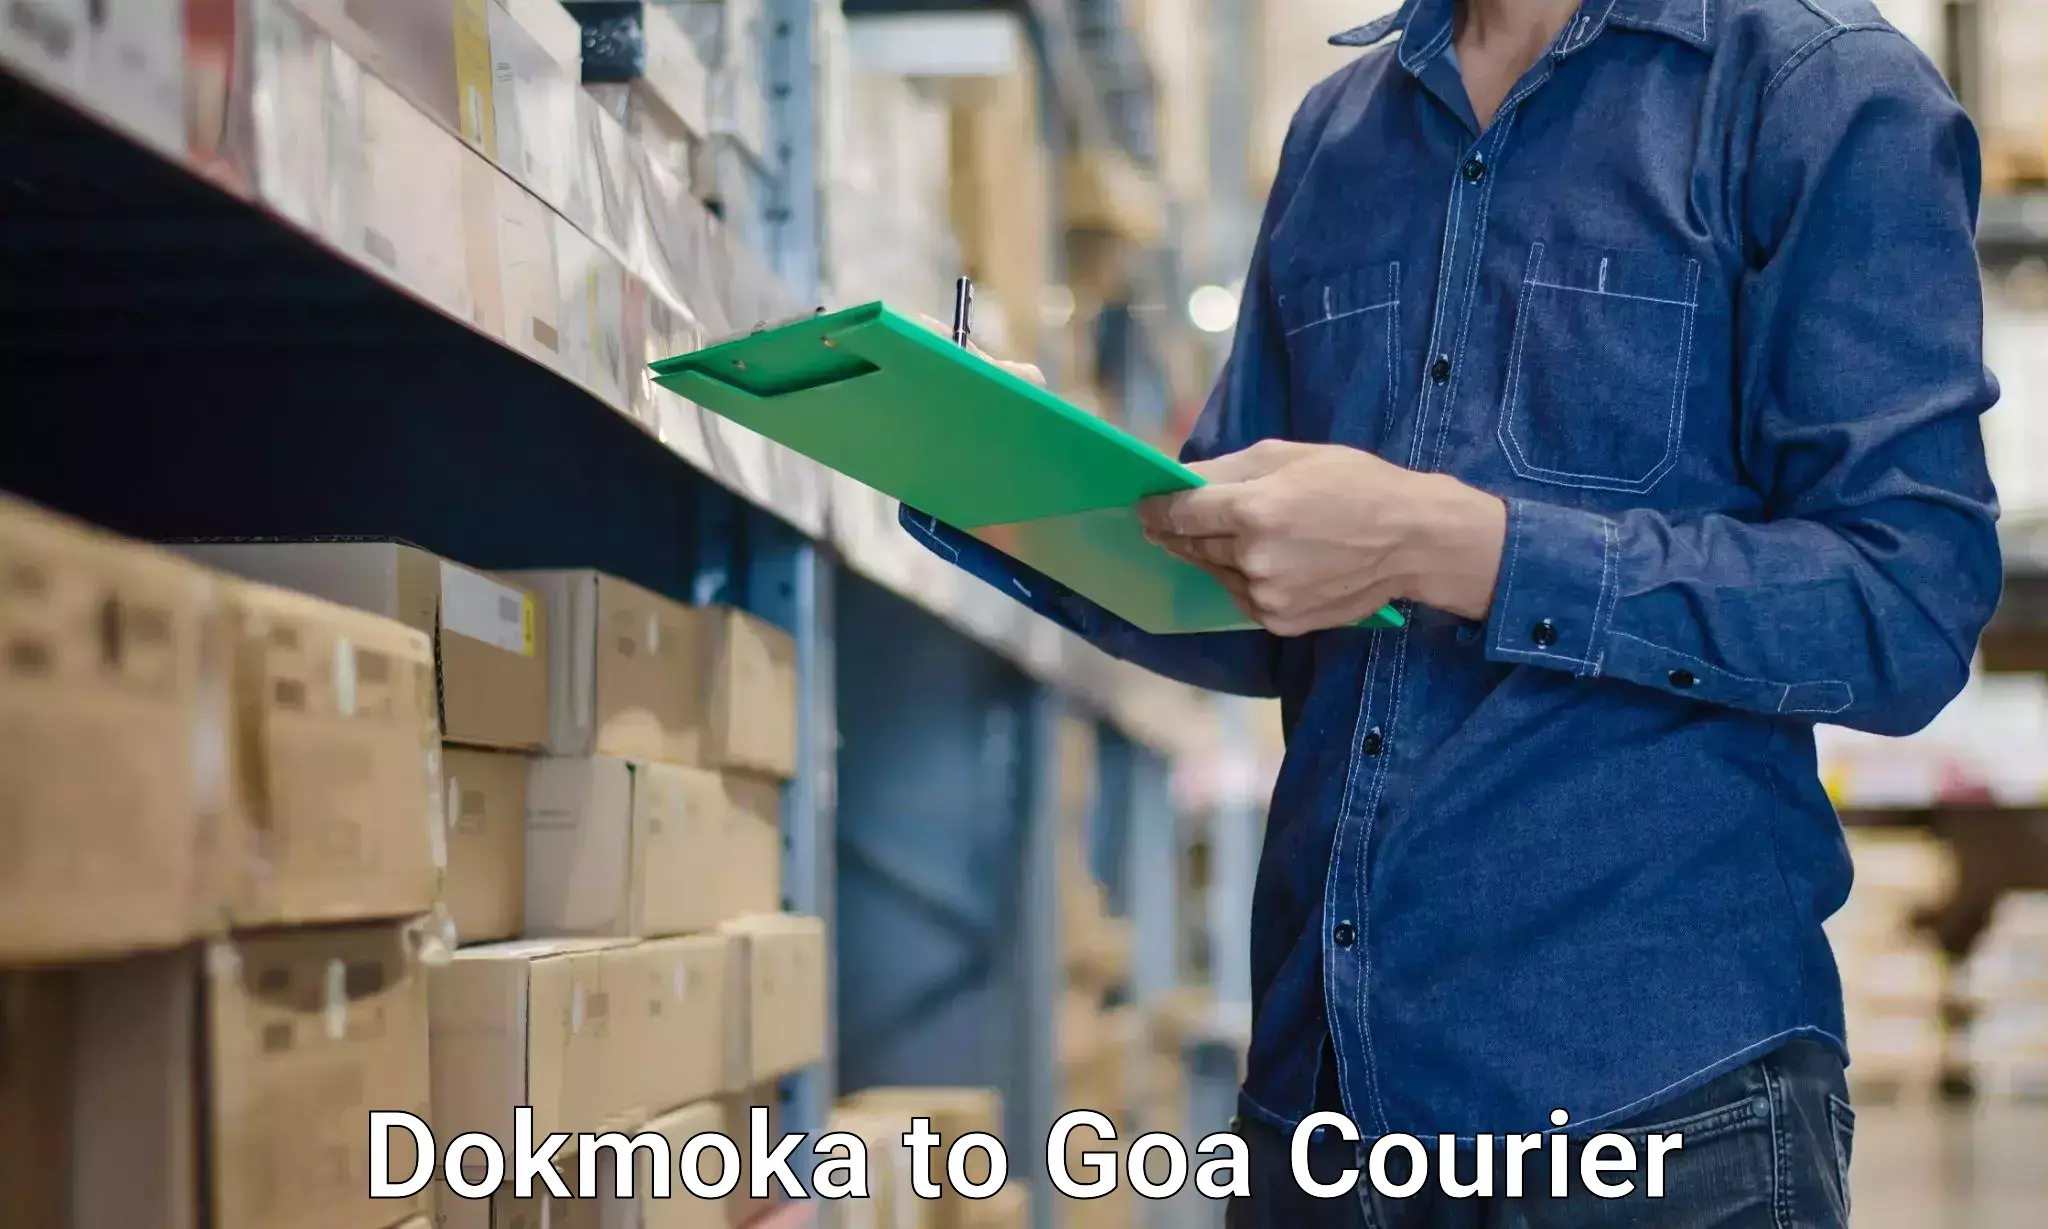 Professional movers and packers Dokmoka to Goa